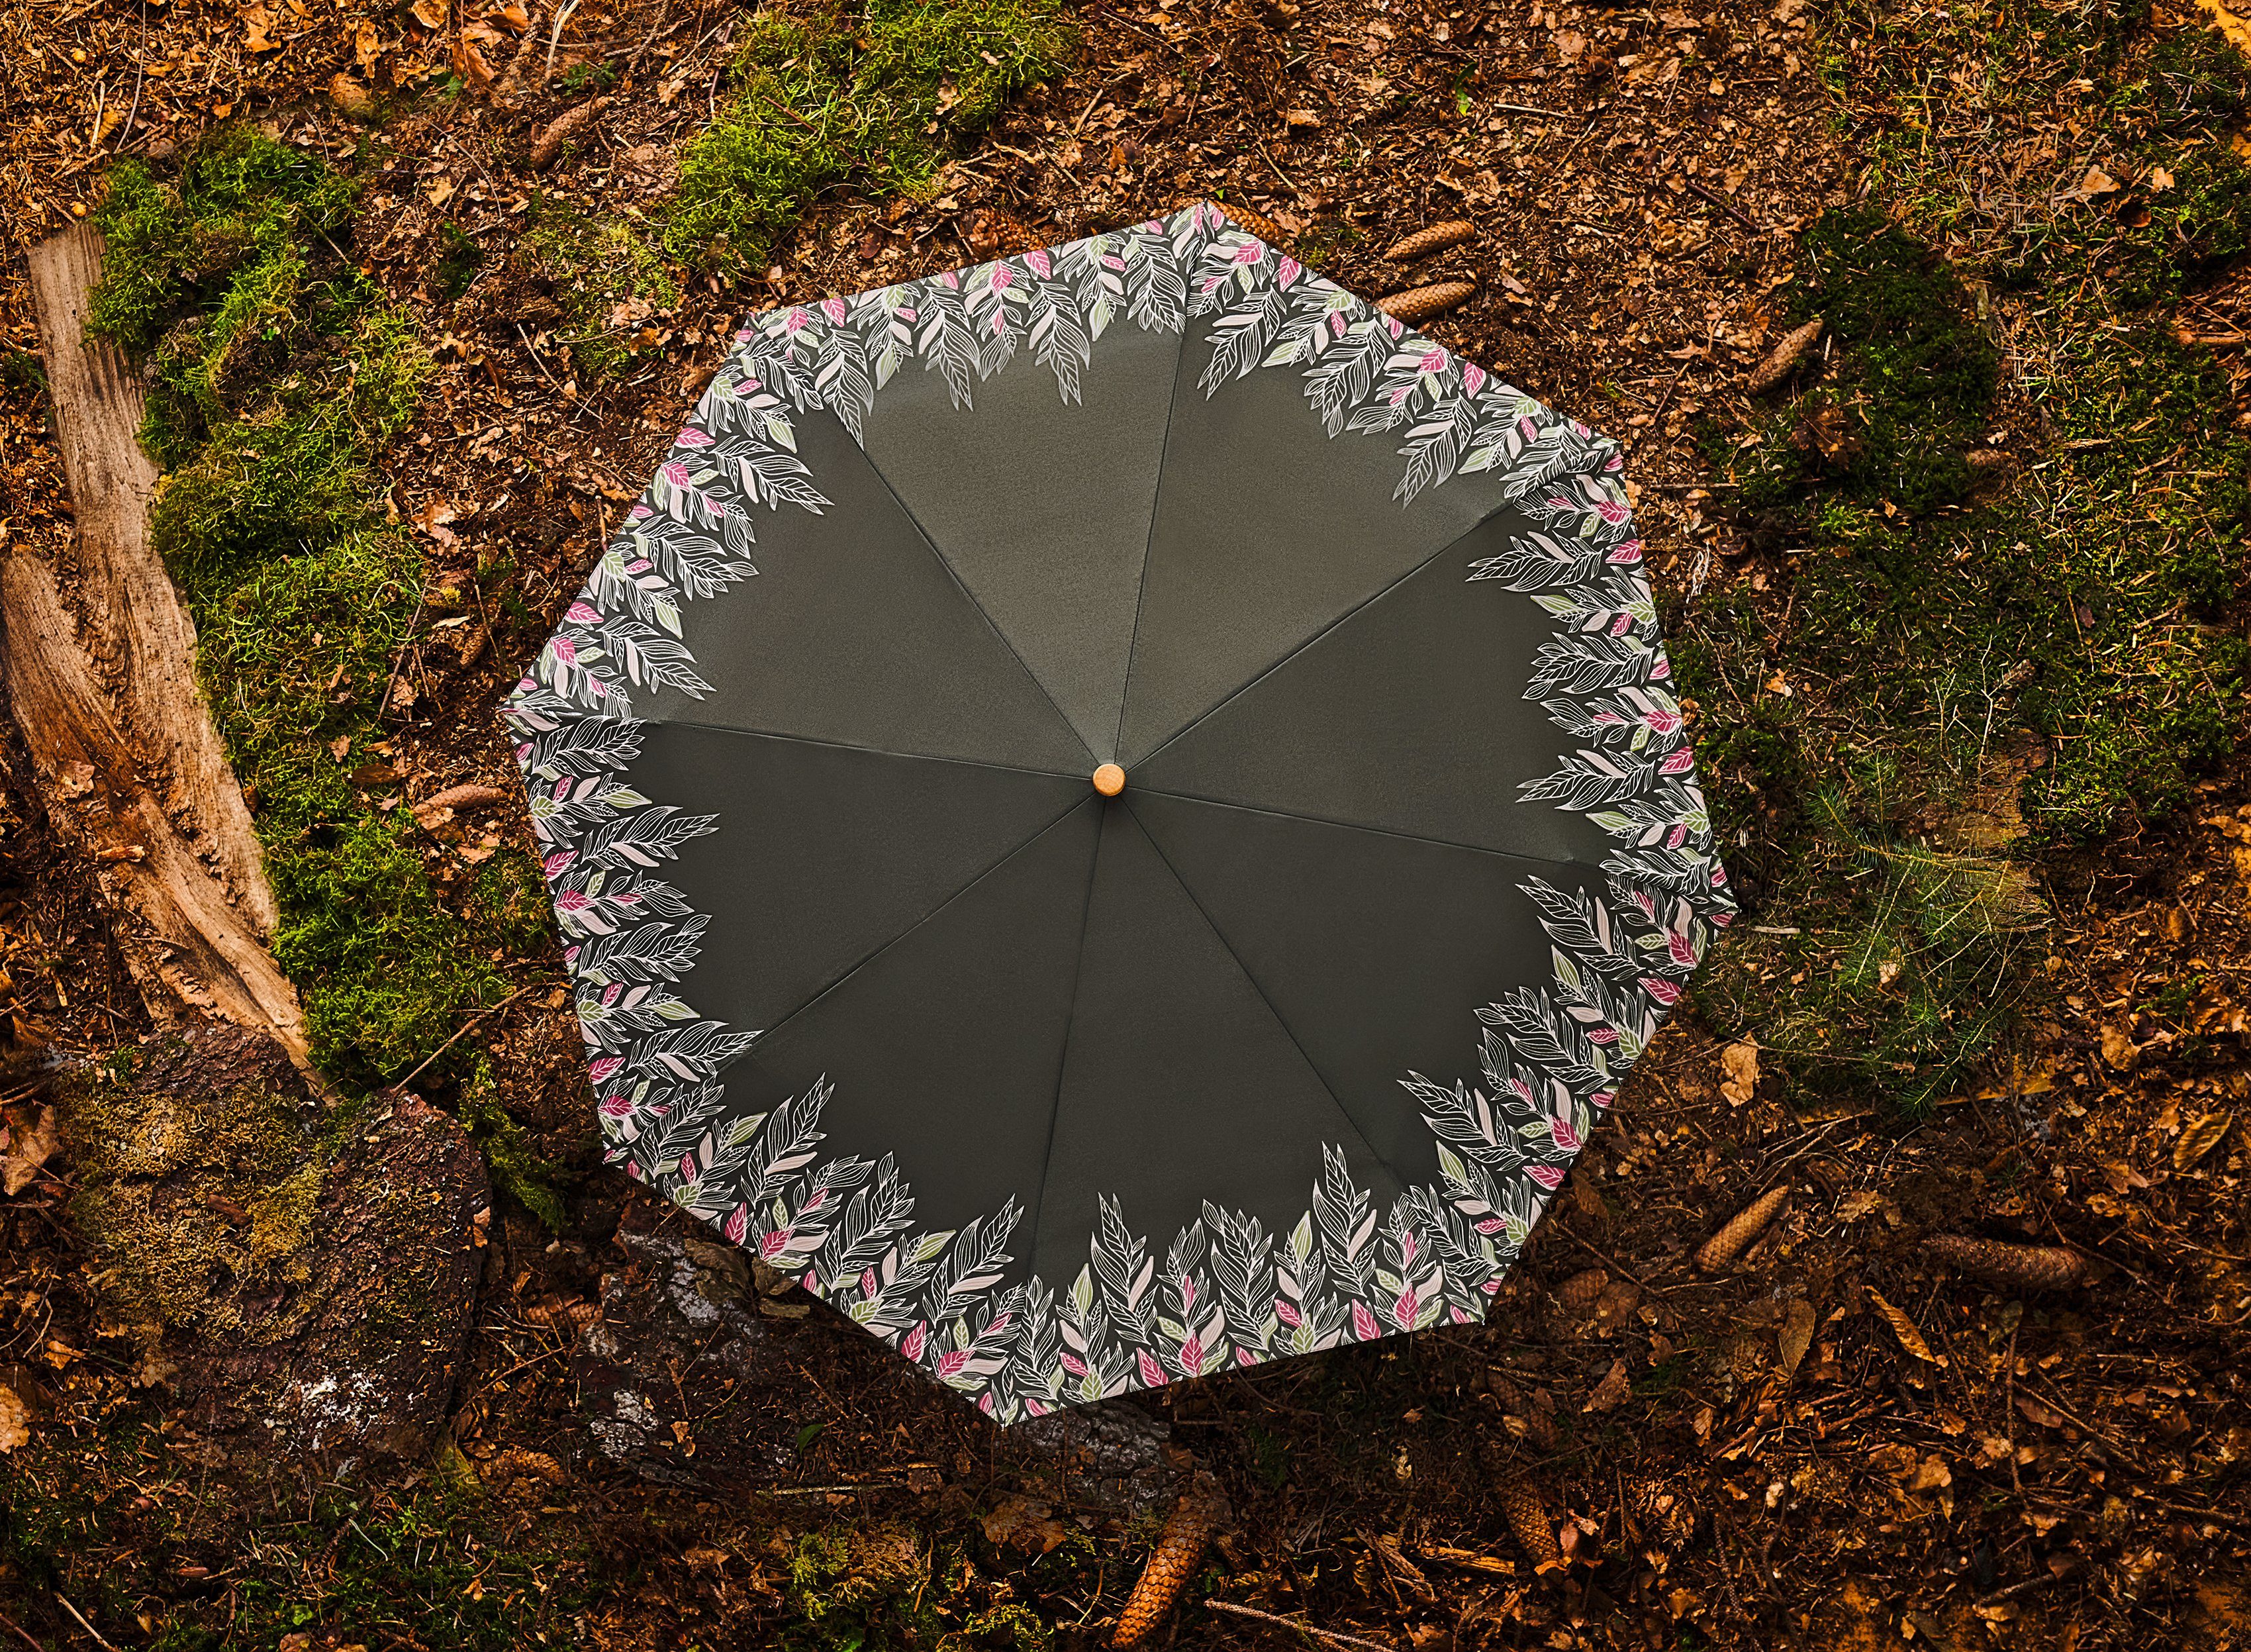 Long, aus Material nature doppler® Schirmgriff mit recyceltem Stockregenschirm olive, Holz intention aus